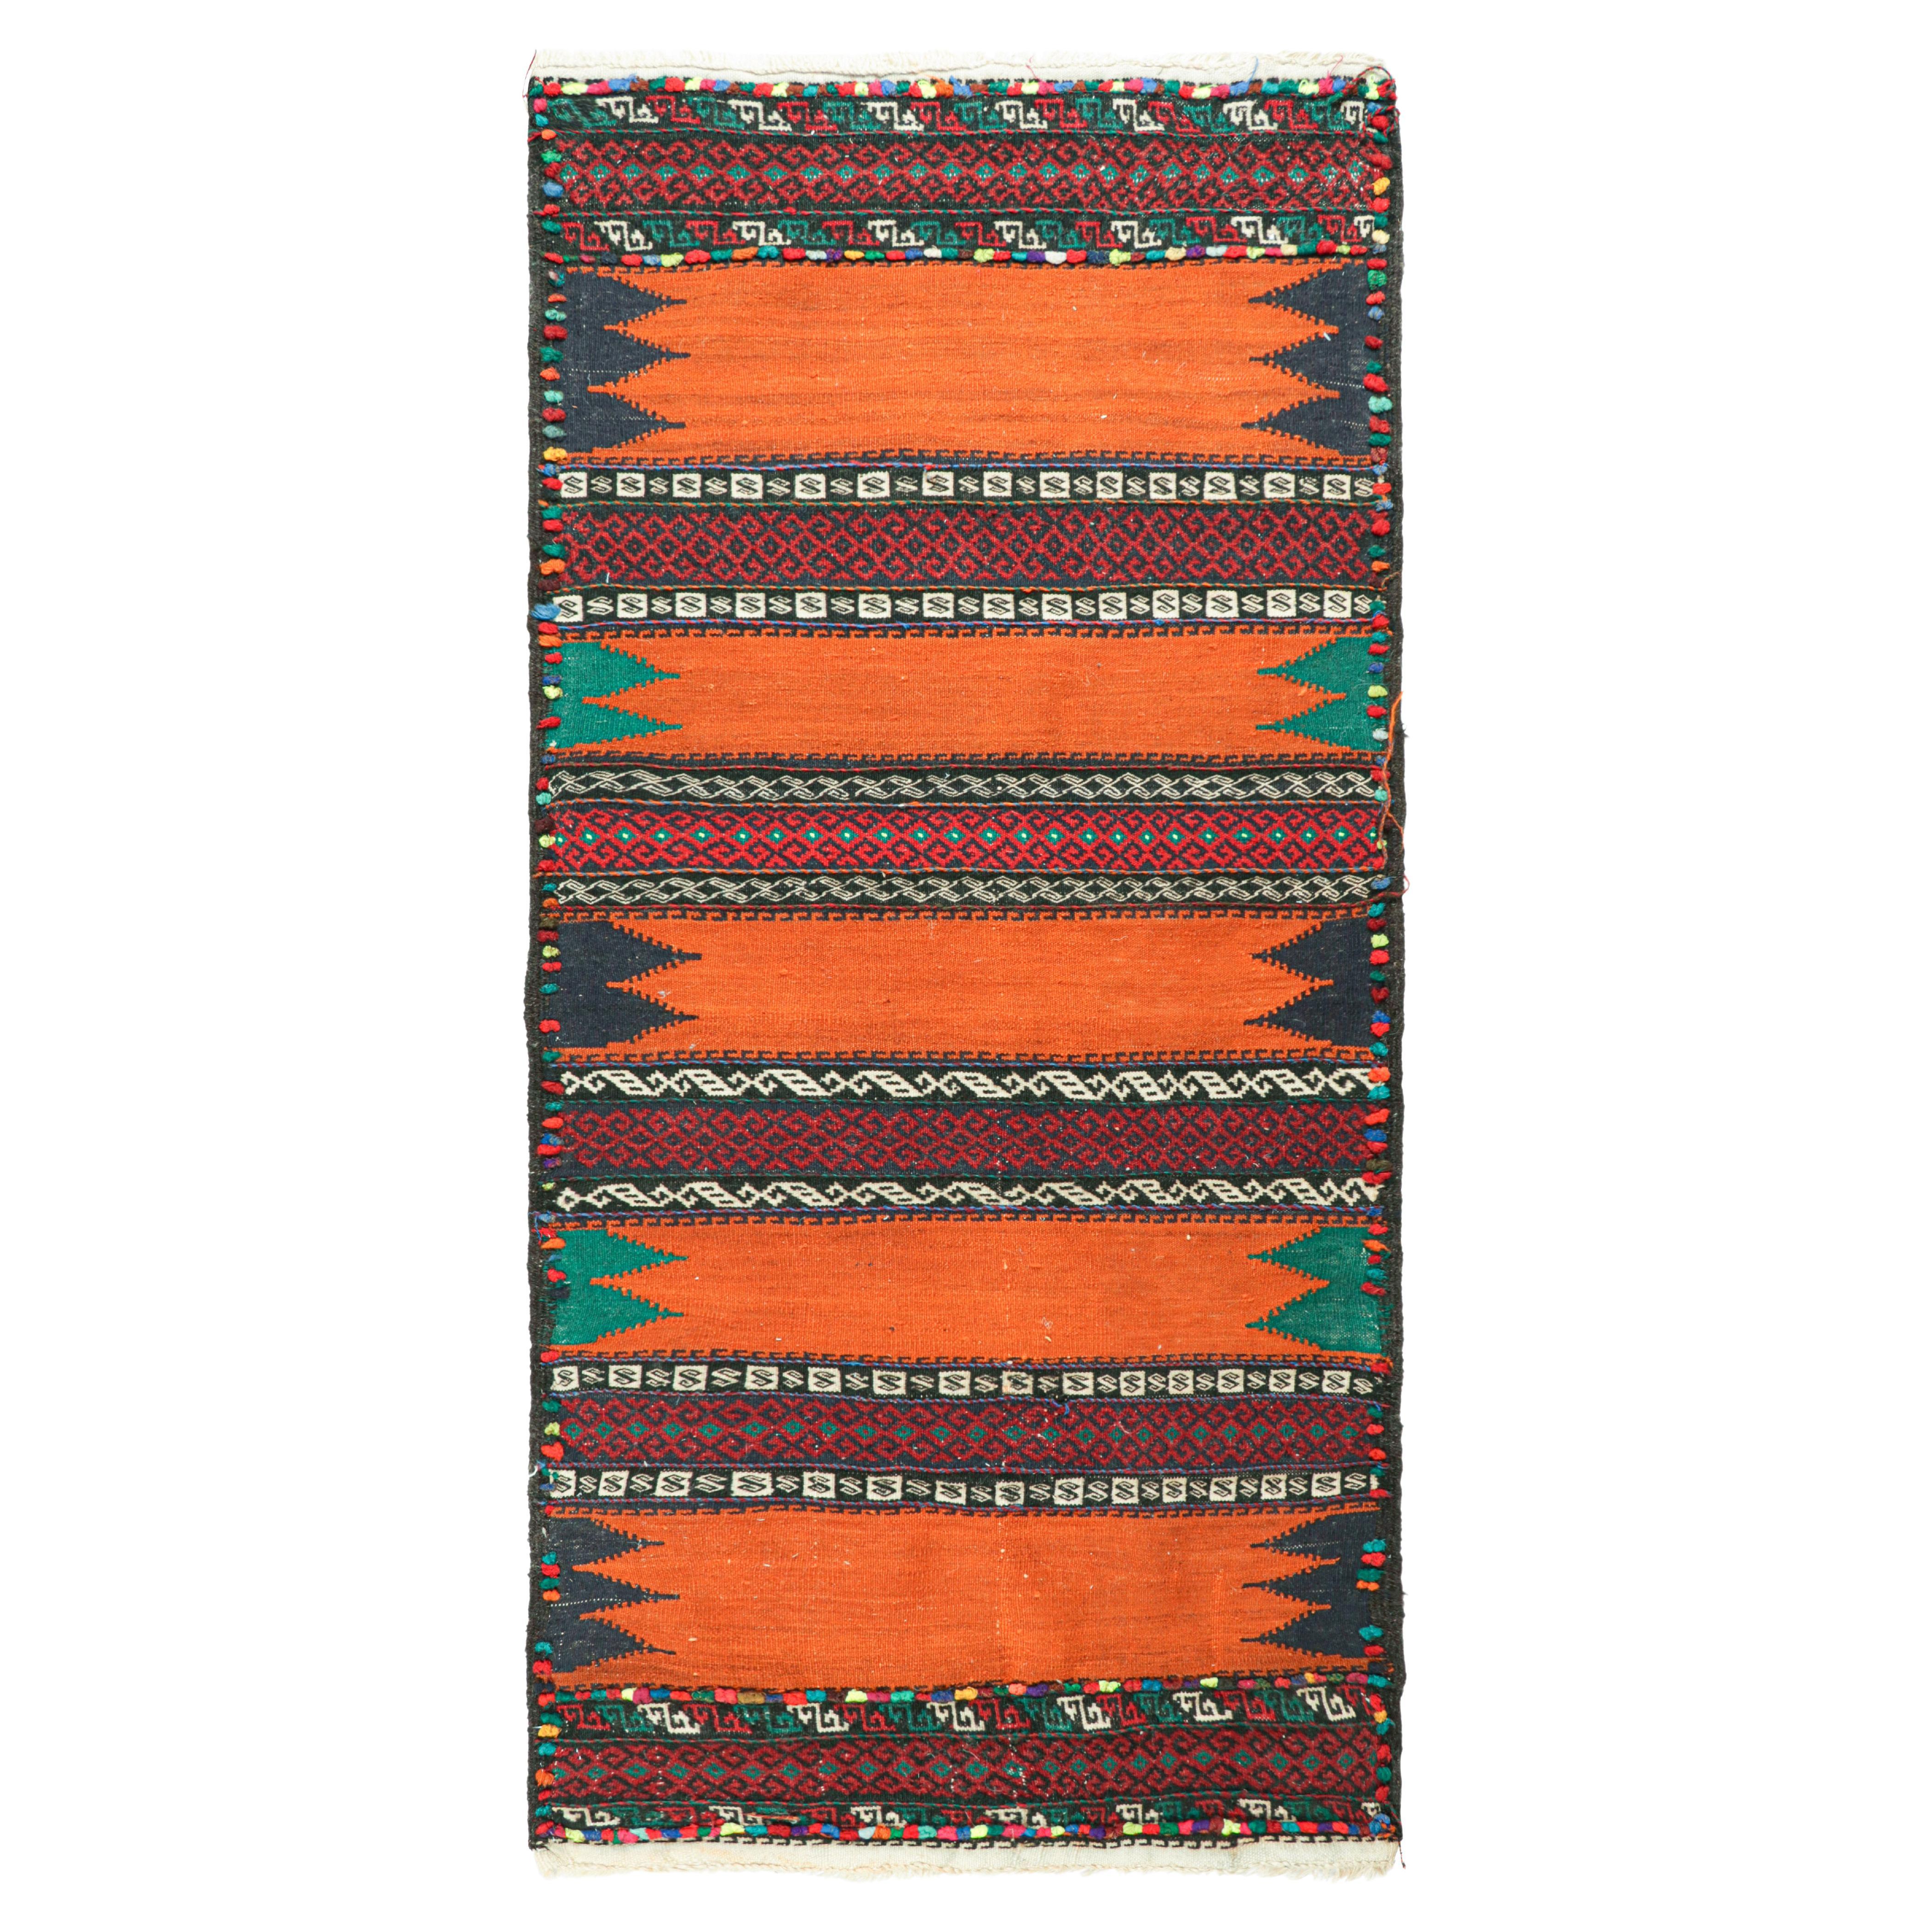 Vintage Afghan Kilim Runner in Orange with Geometric Patterns, from Rug & Kilim For Sale